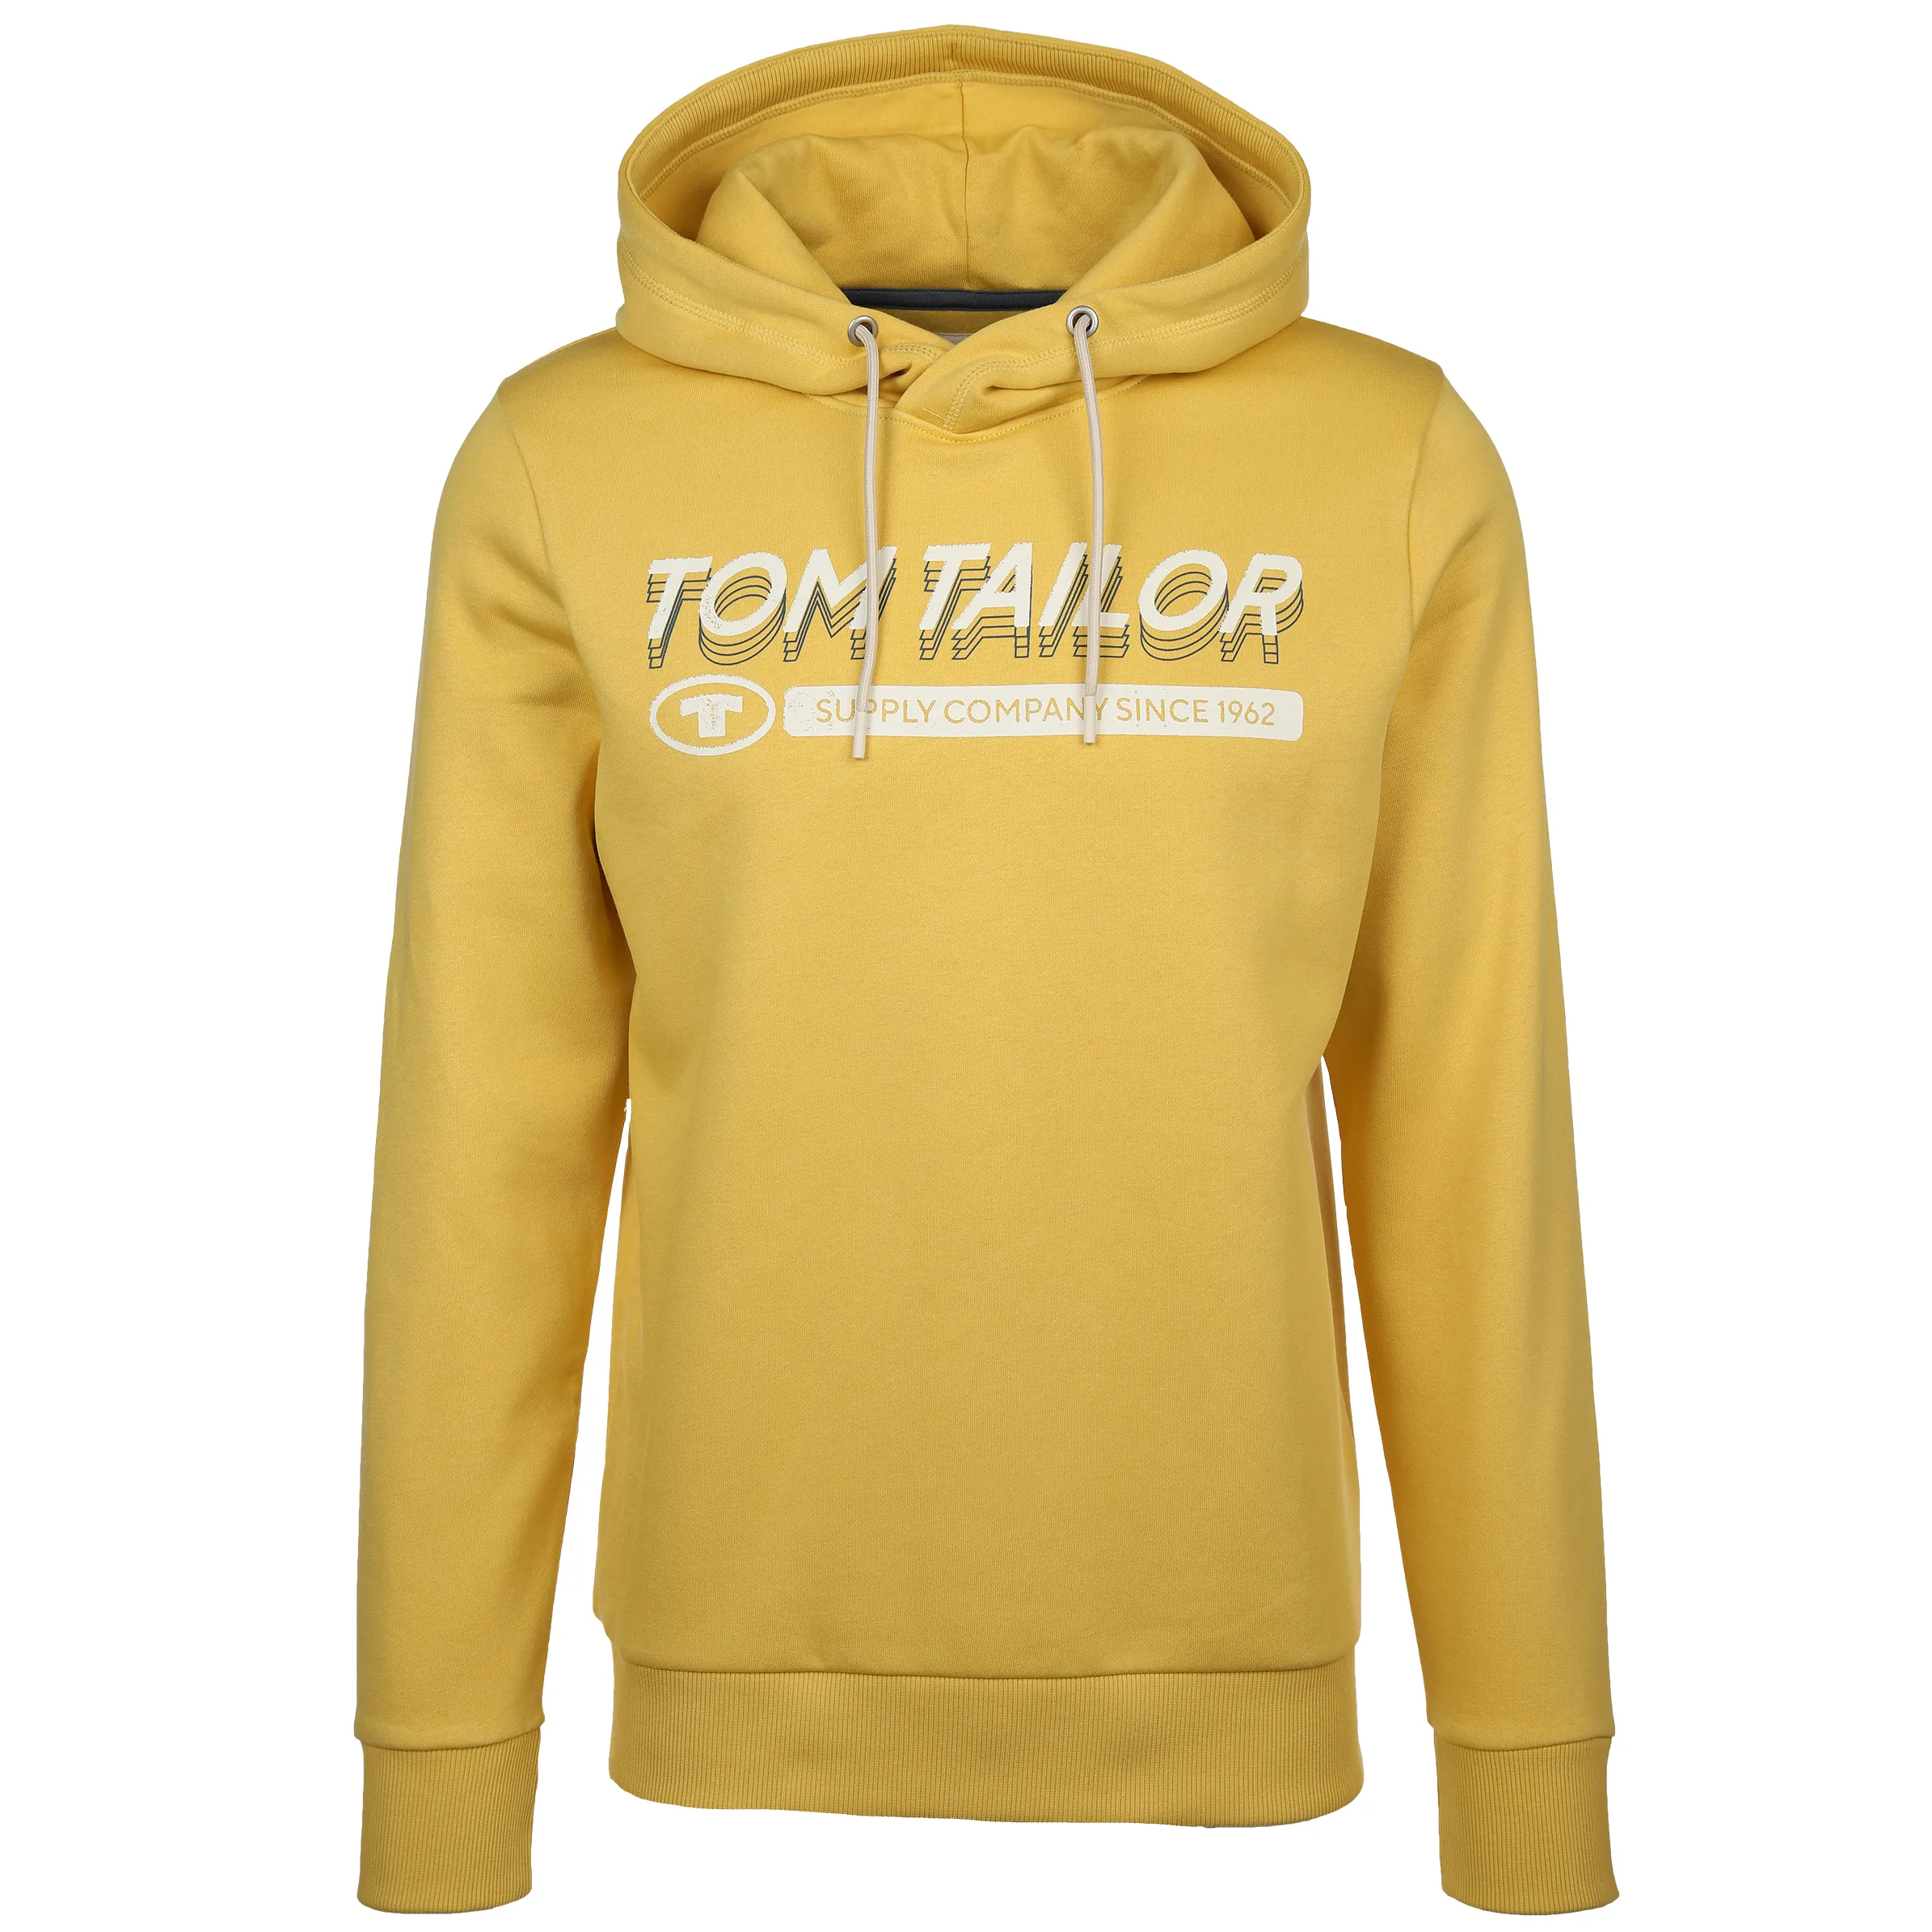 Tom Tailor 1039649 logo hood Gelb 887466 11657 1